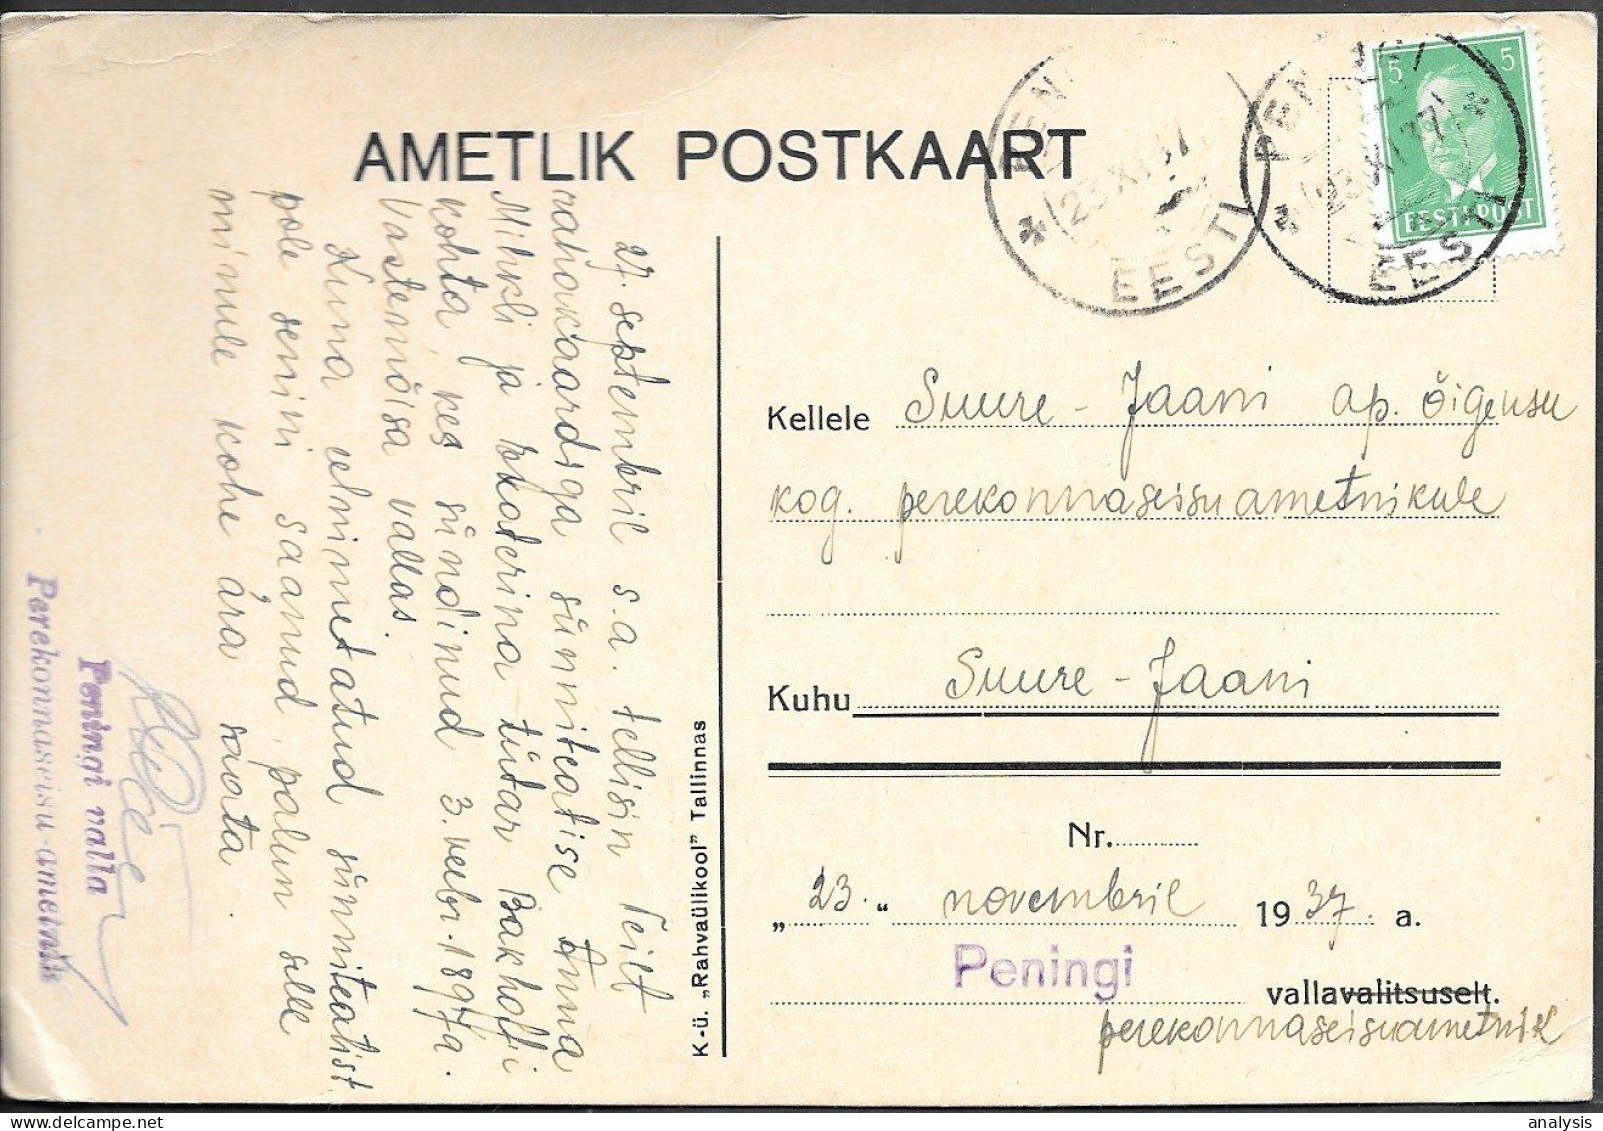 Estonia Peningi Municipal Government Official Postcard Mailed 1937. - Estland